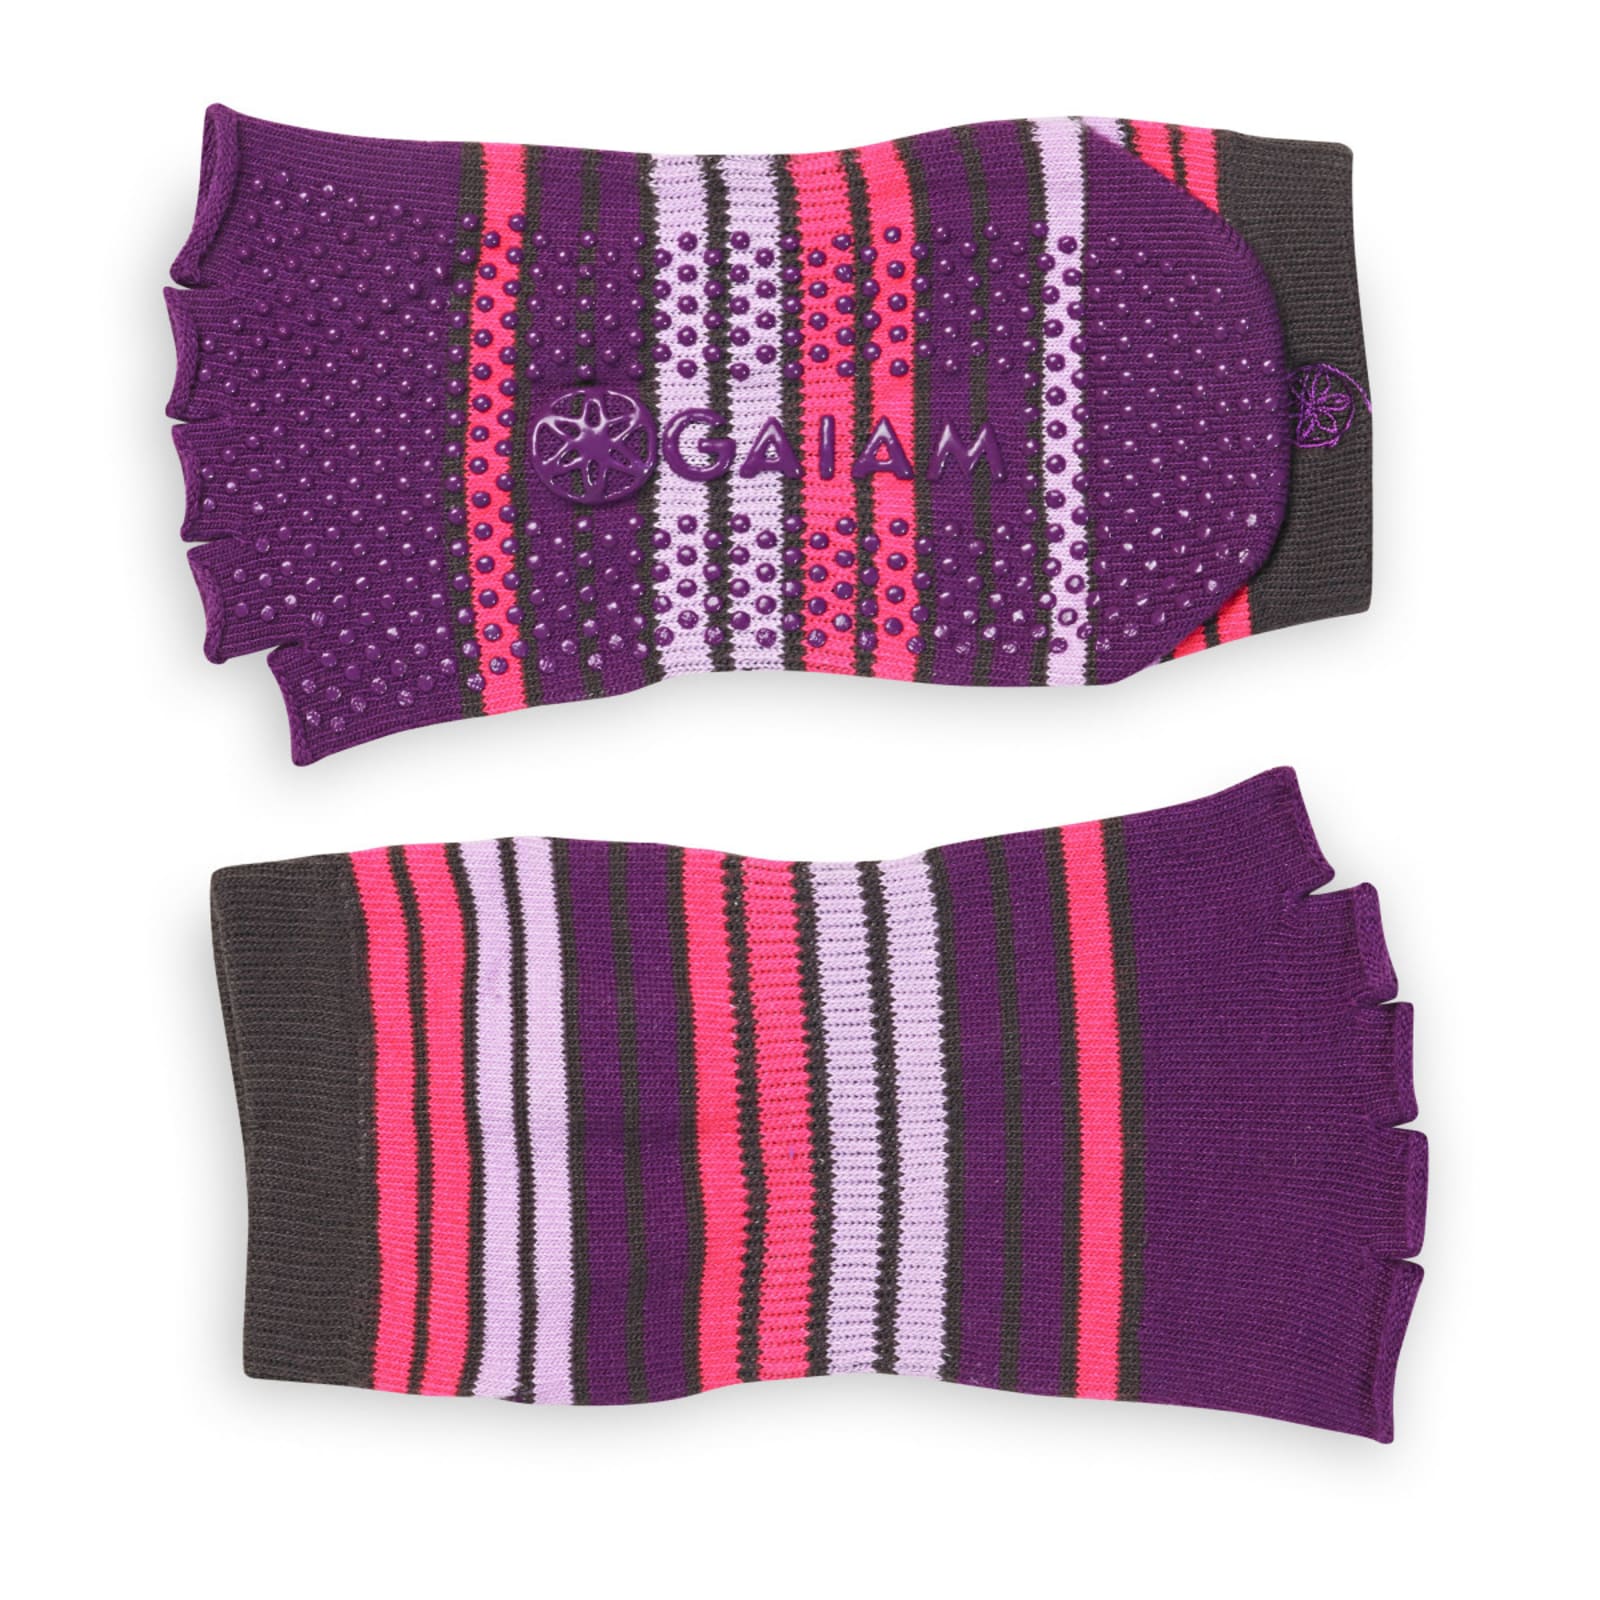 Purple Toeless Yoga Socks by Gaiam at Fleet Farm